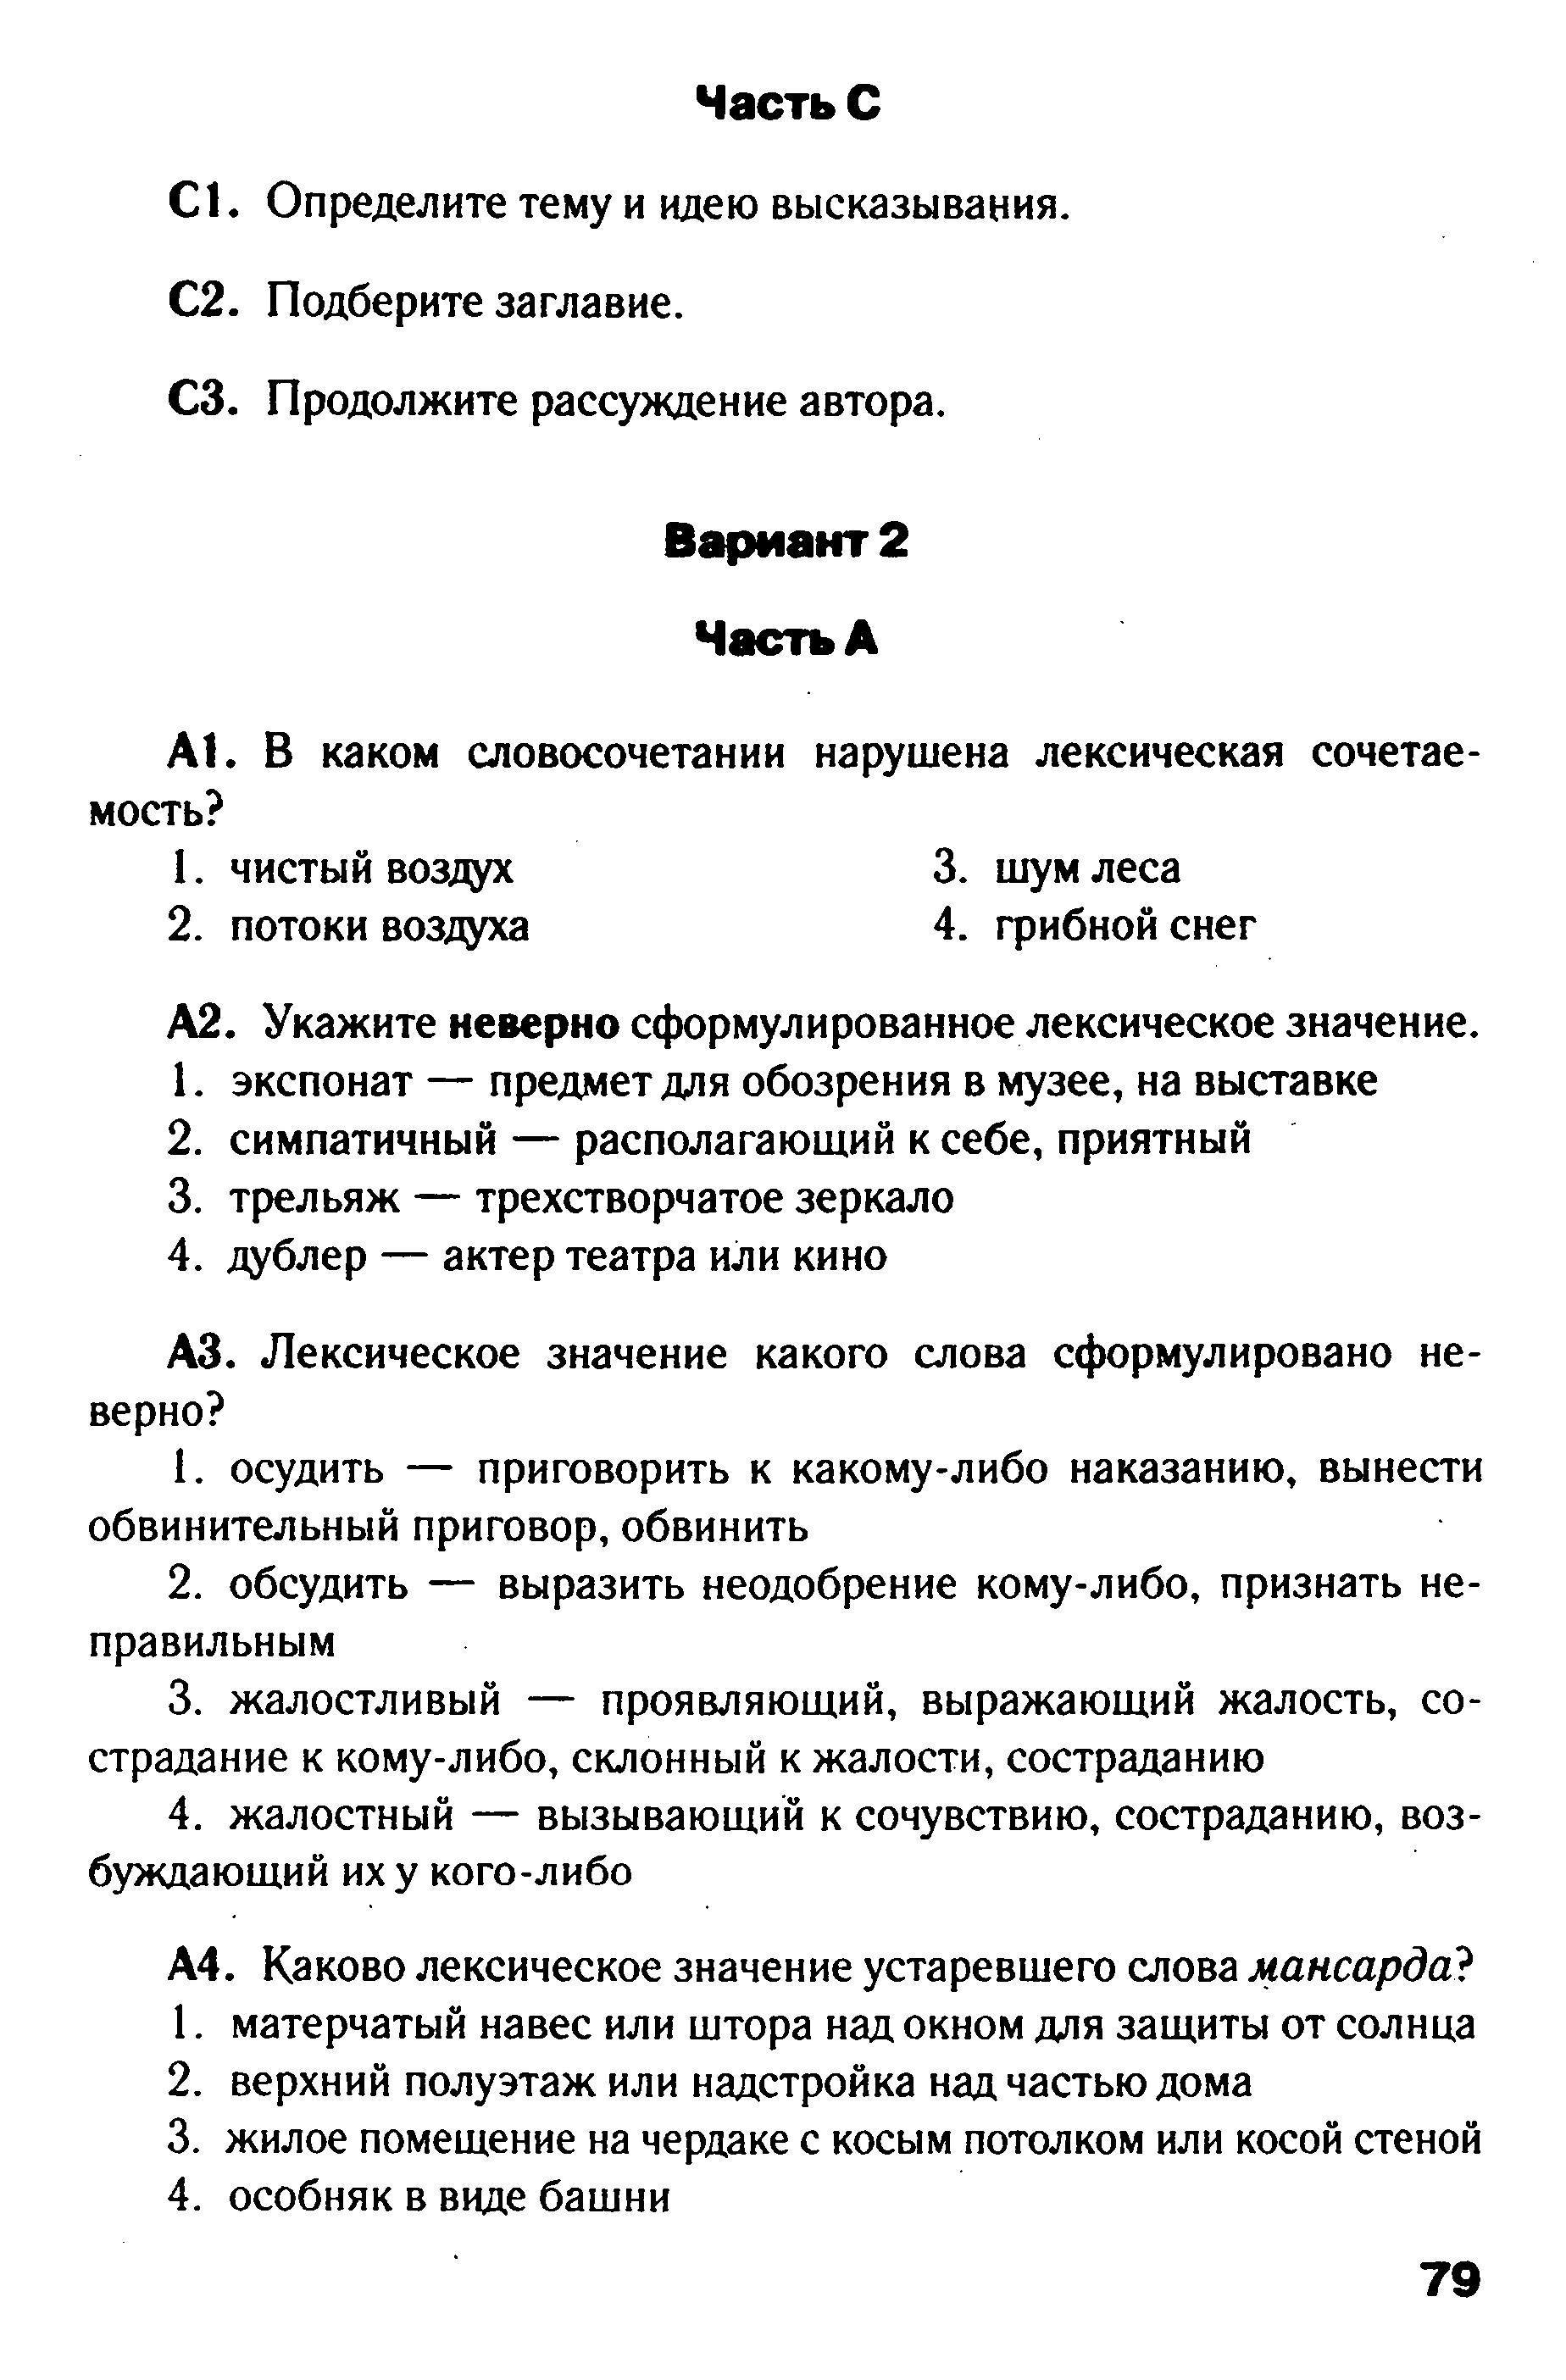 Тест по русскому языку в формате ГИА на тему Лексика. Культура речи вариант 2 (5 класс)